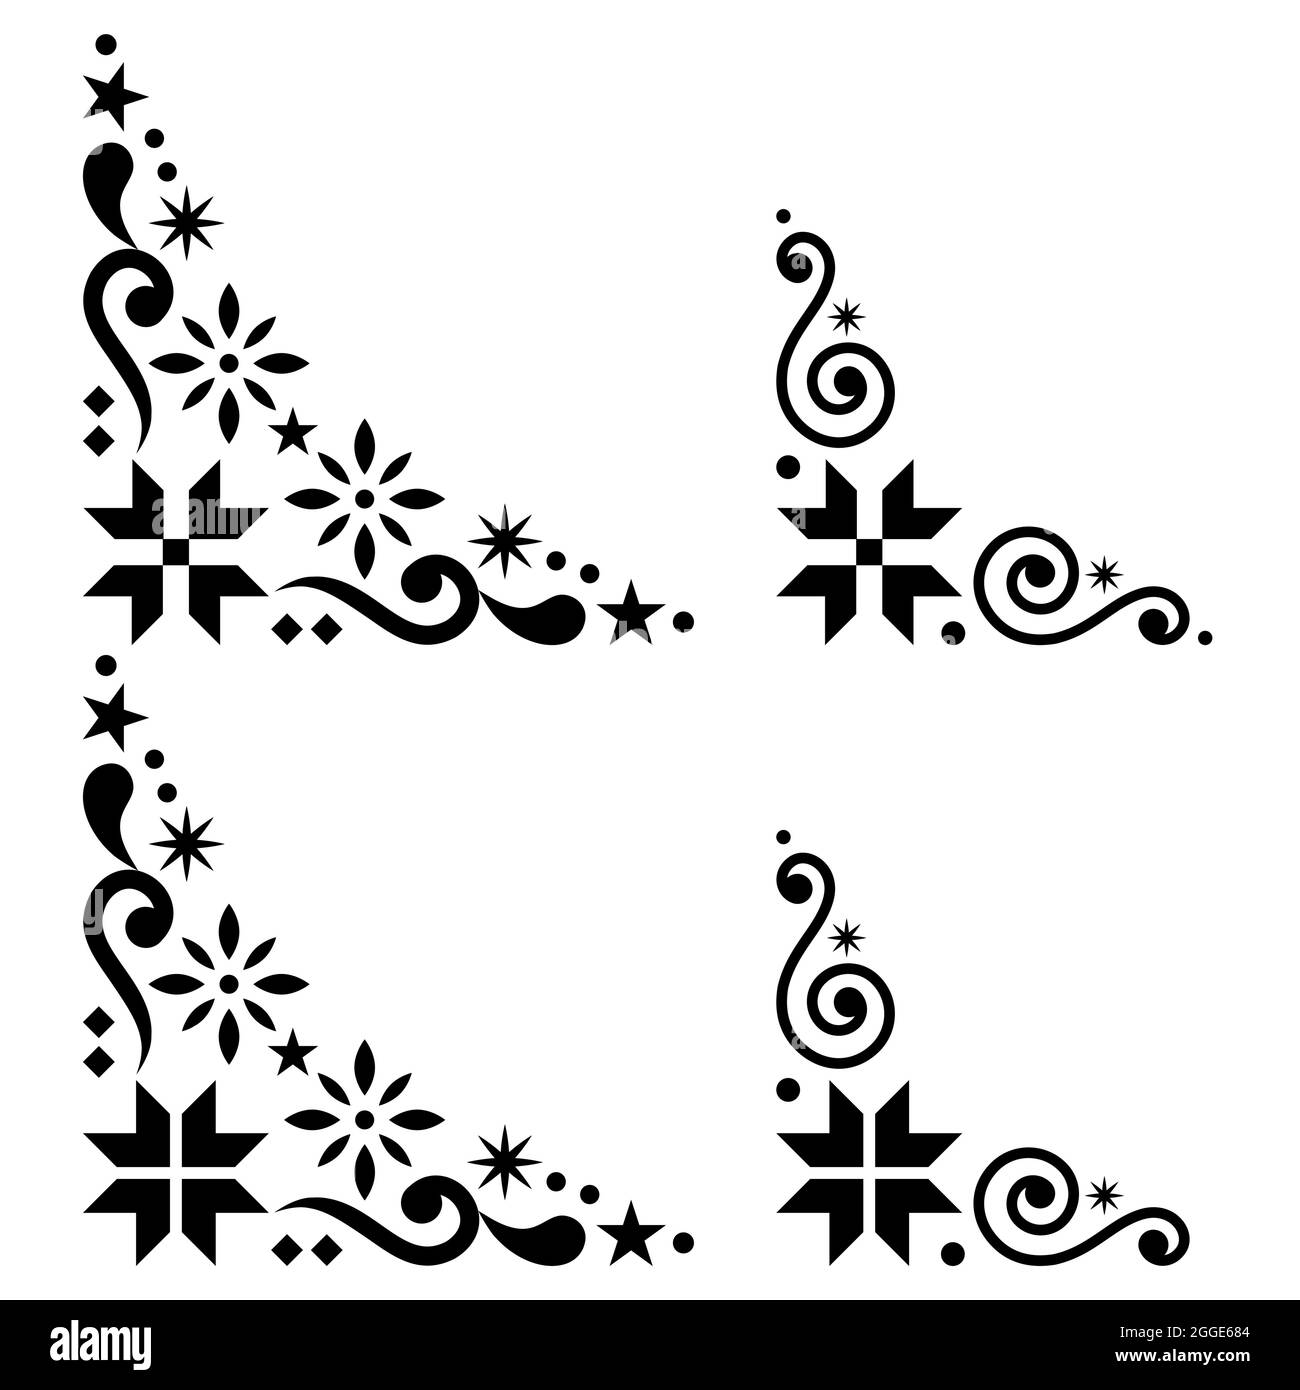 Christmas vector corner set - Scandinavian style, folk design elements with snowflakes black on white background Stock Vector